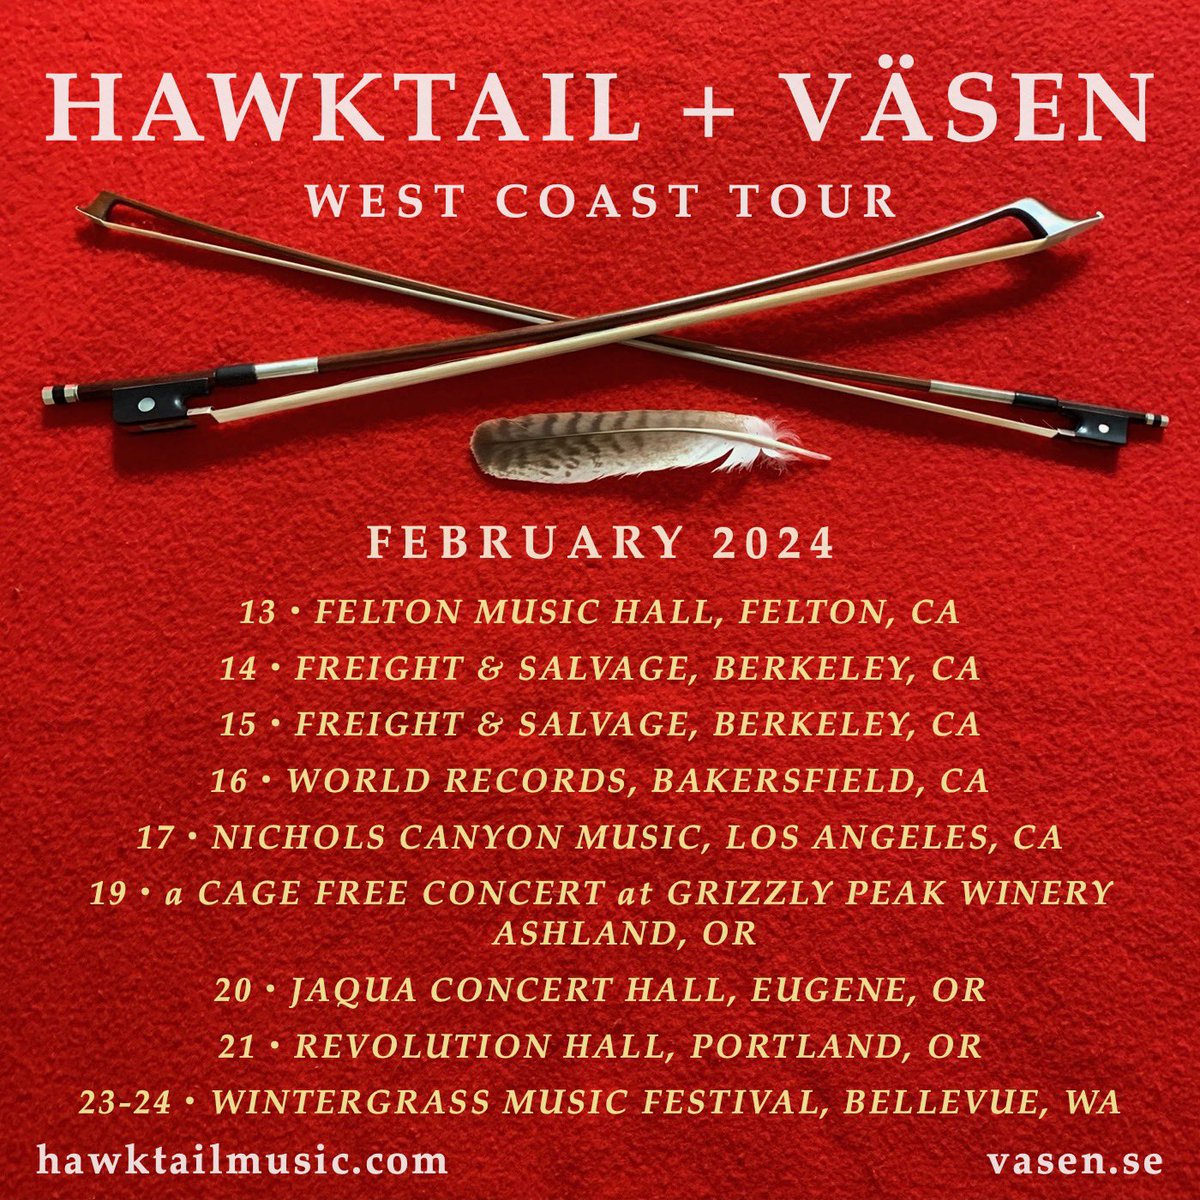 West Coast tour starts in 1 week! Grab your tix.